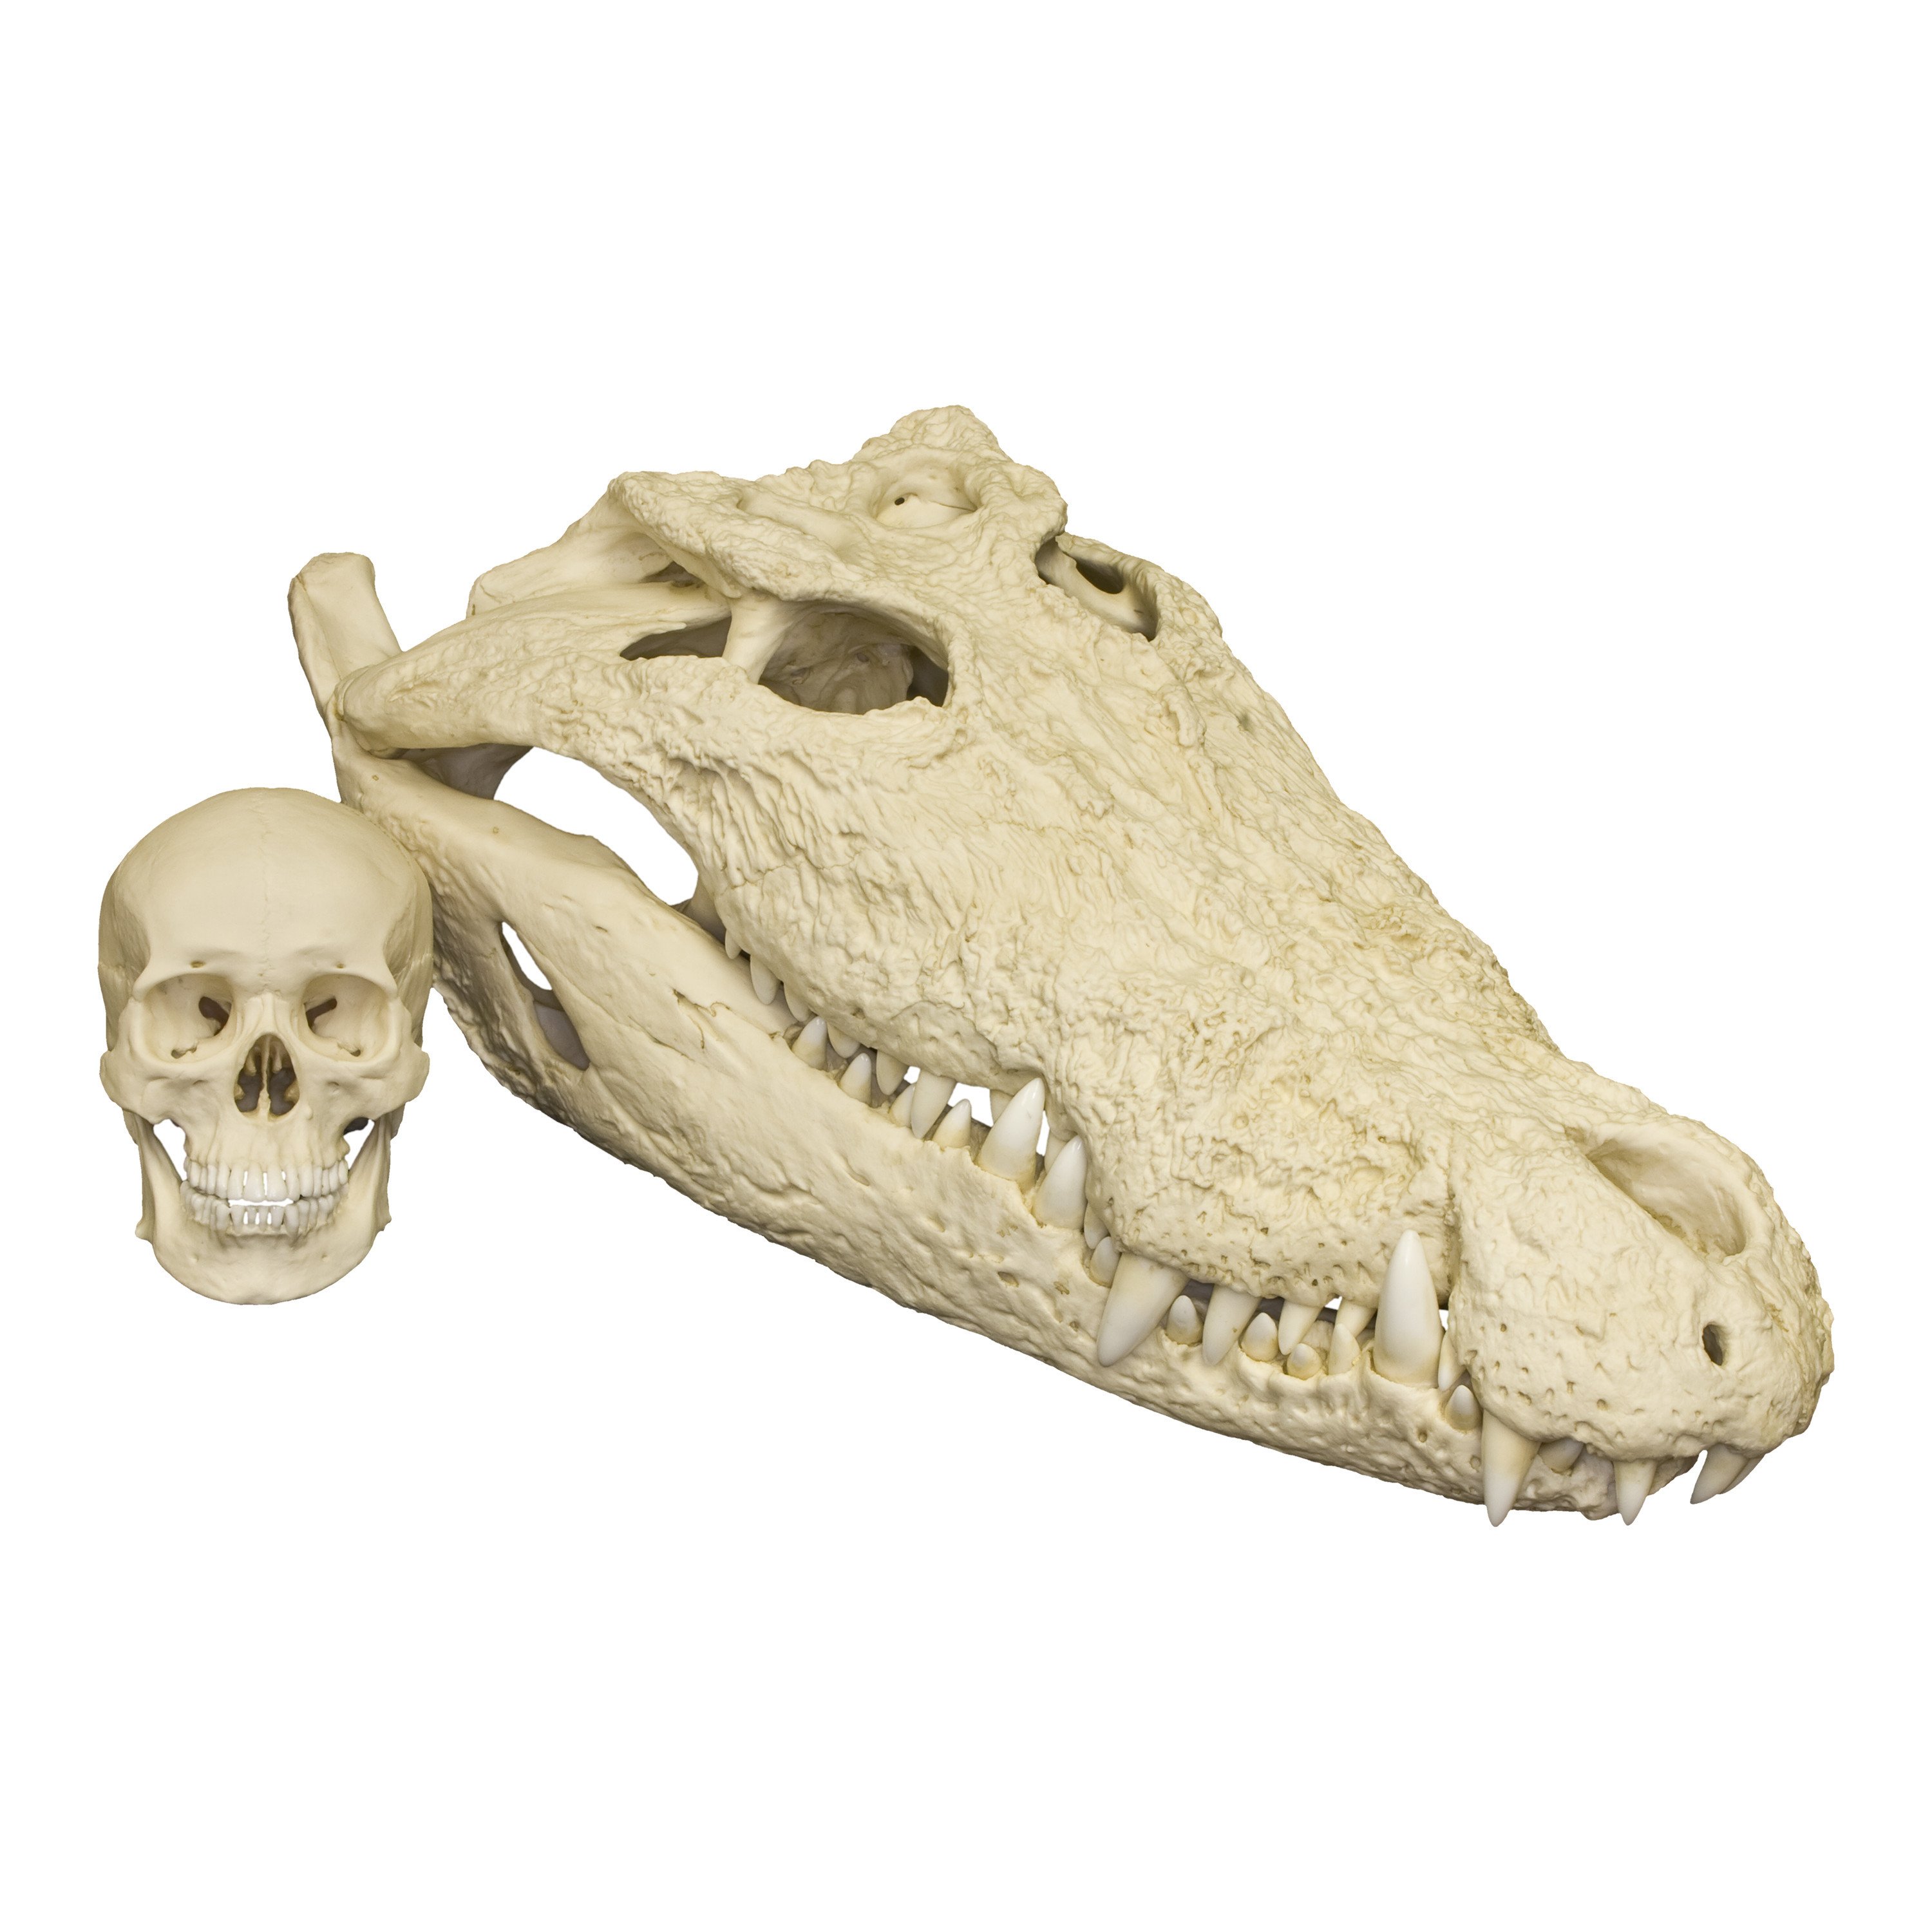 Replica Saltwater Crocodile For Sale – Skulls Unlimited ...